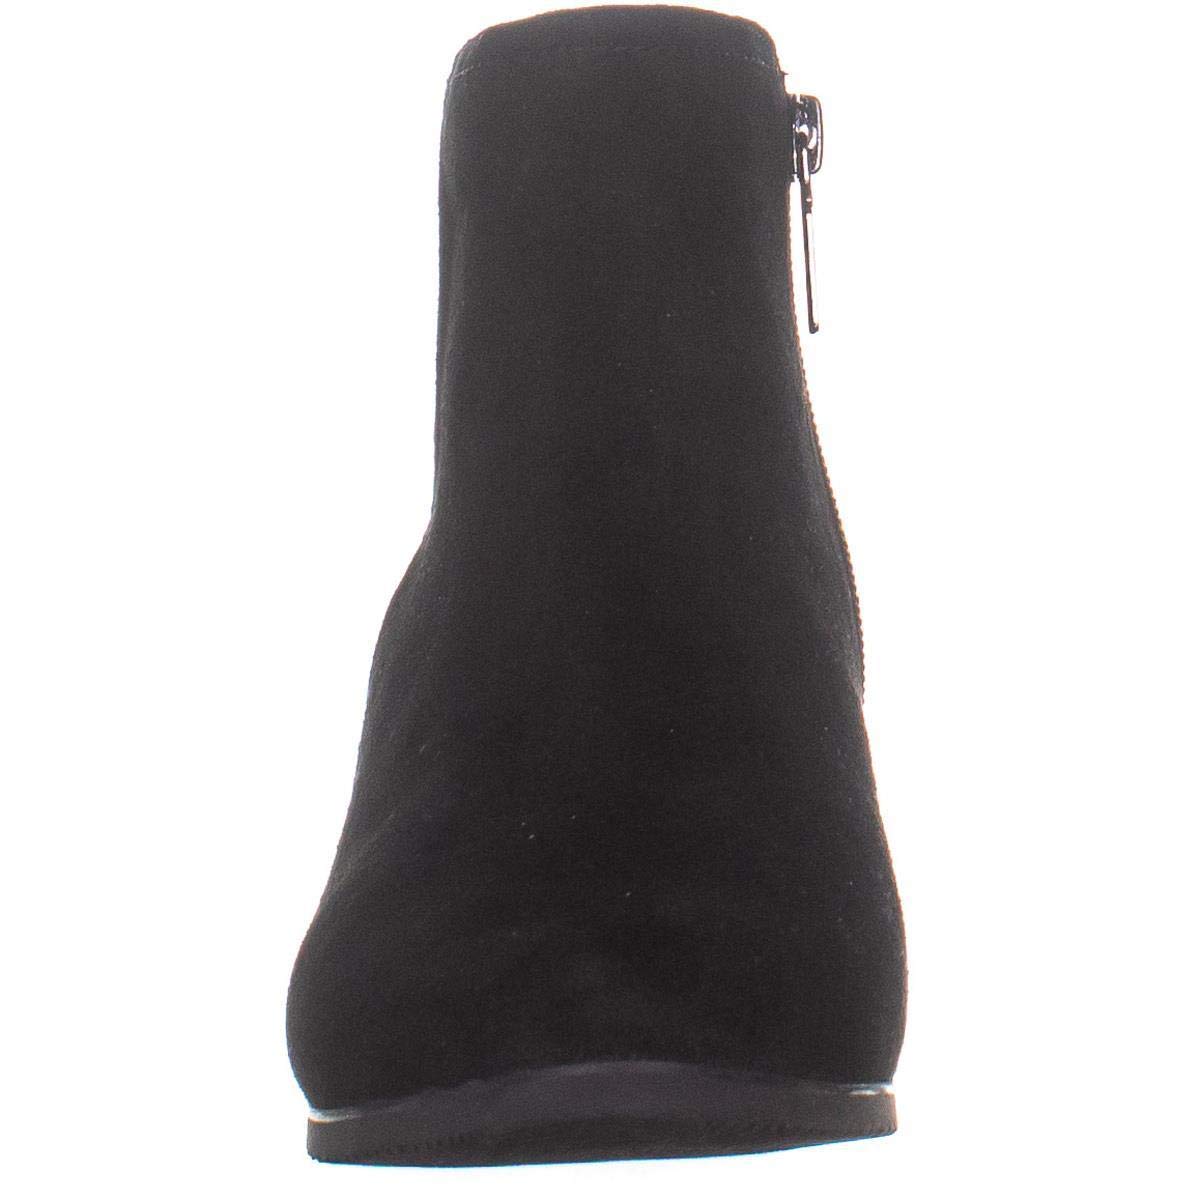 Aqua College Womens Isla Closed Toe Ankle Fashion Boots Black Suede Size 75 L Ebay 9374